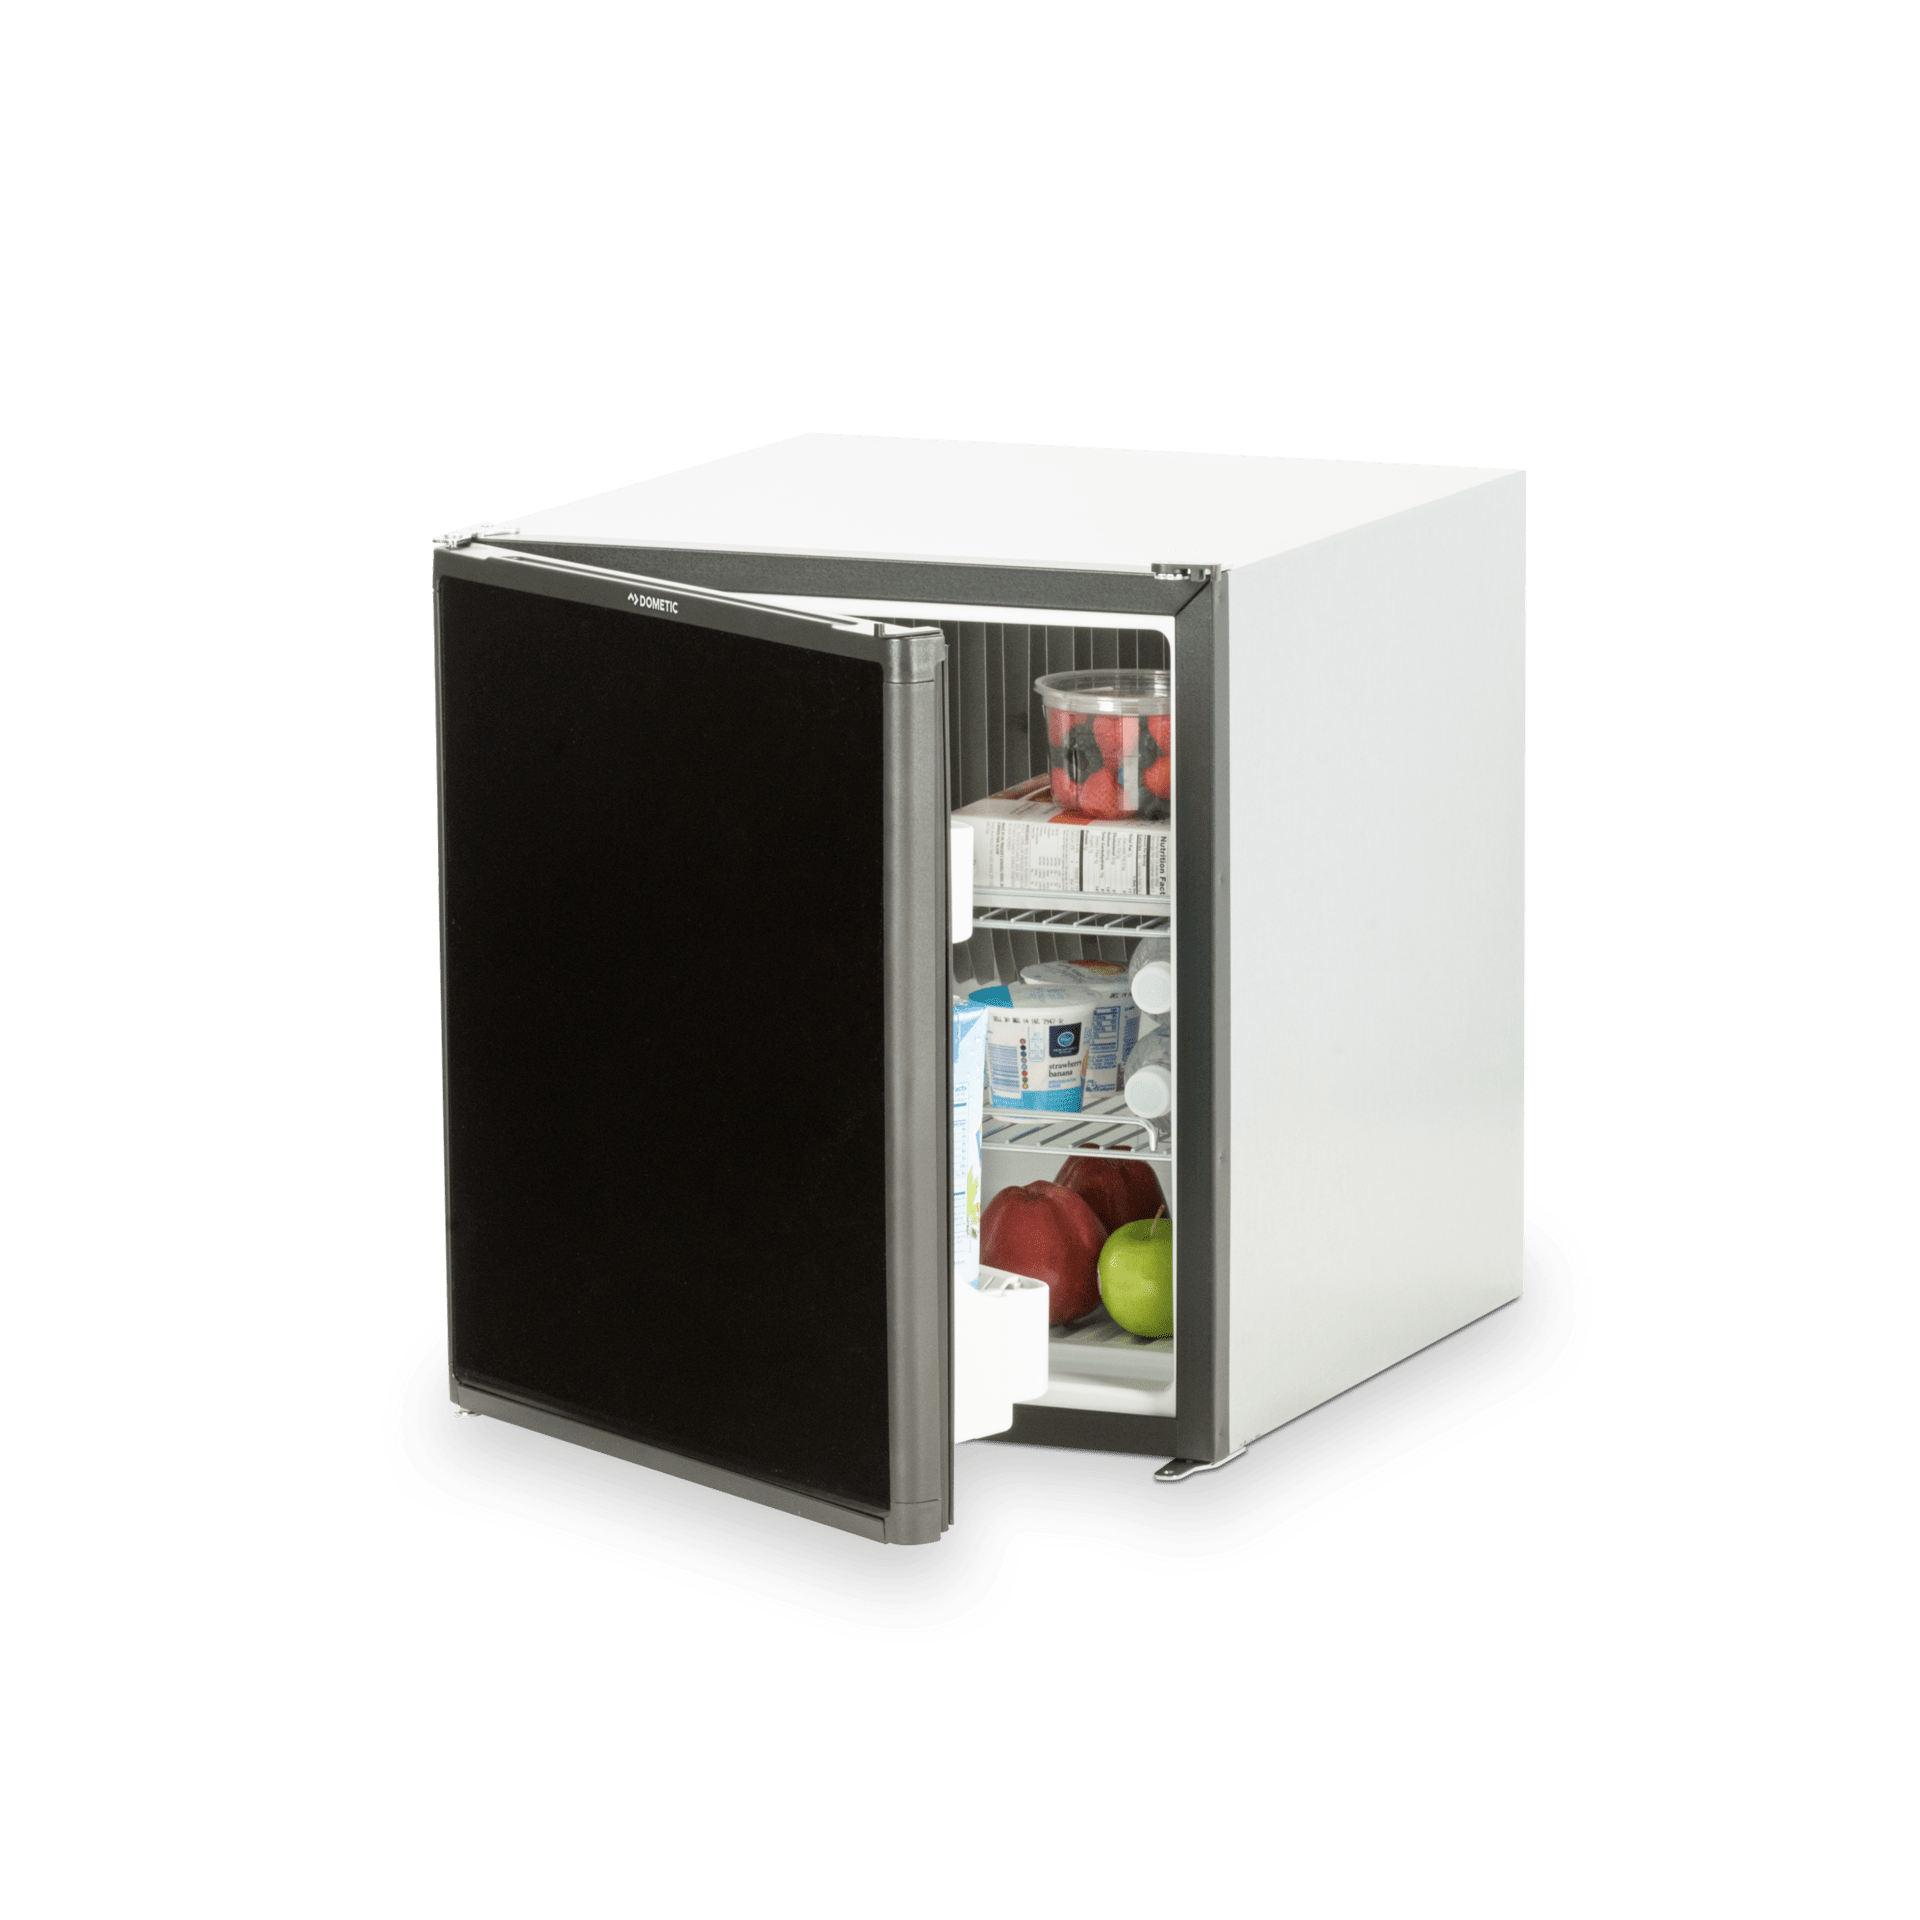 Dometic DMR702RBE Renaissance II RV Refrigerator AC/DC